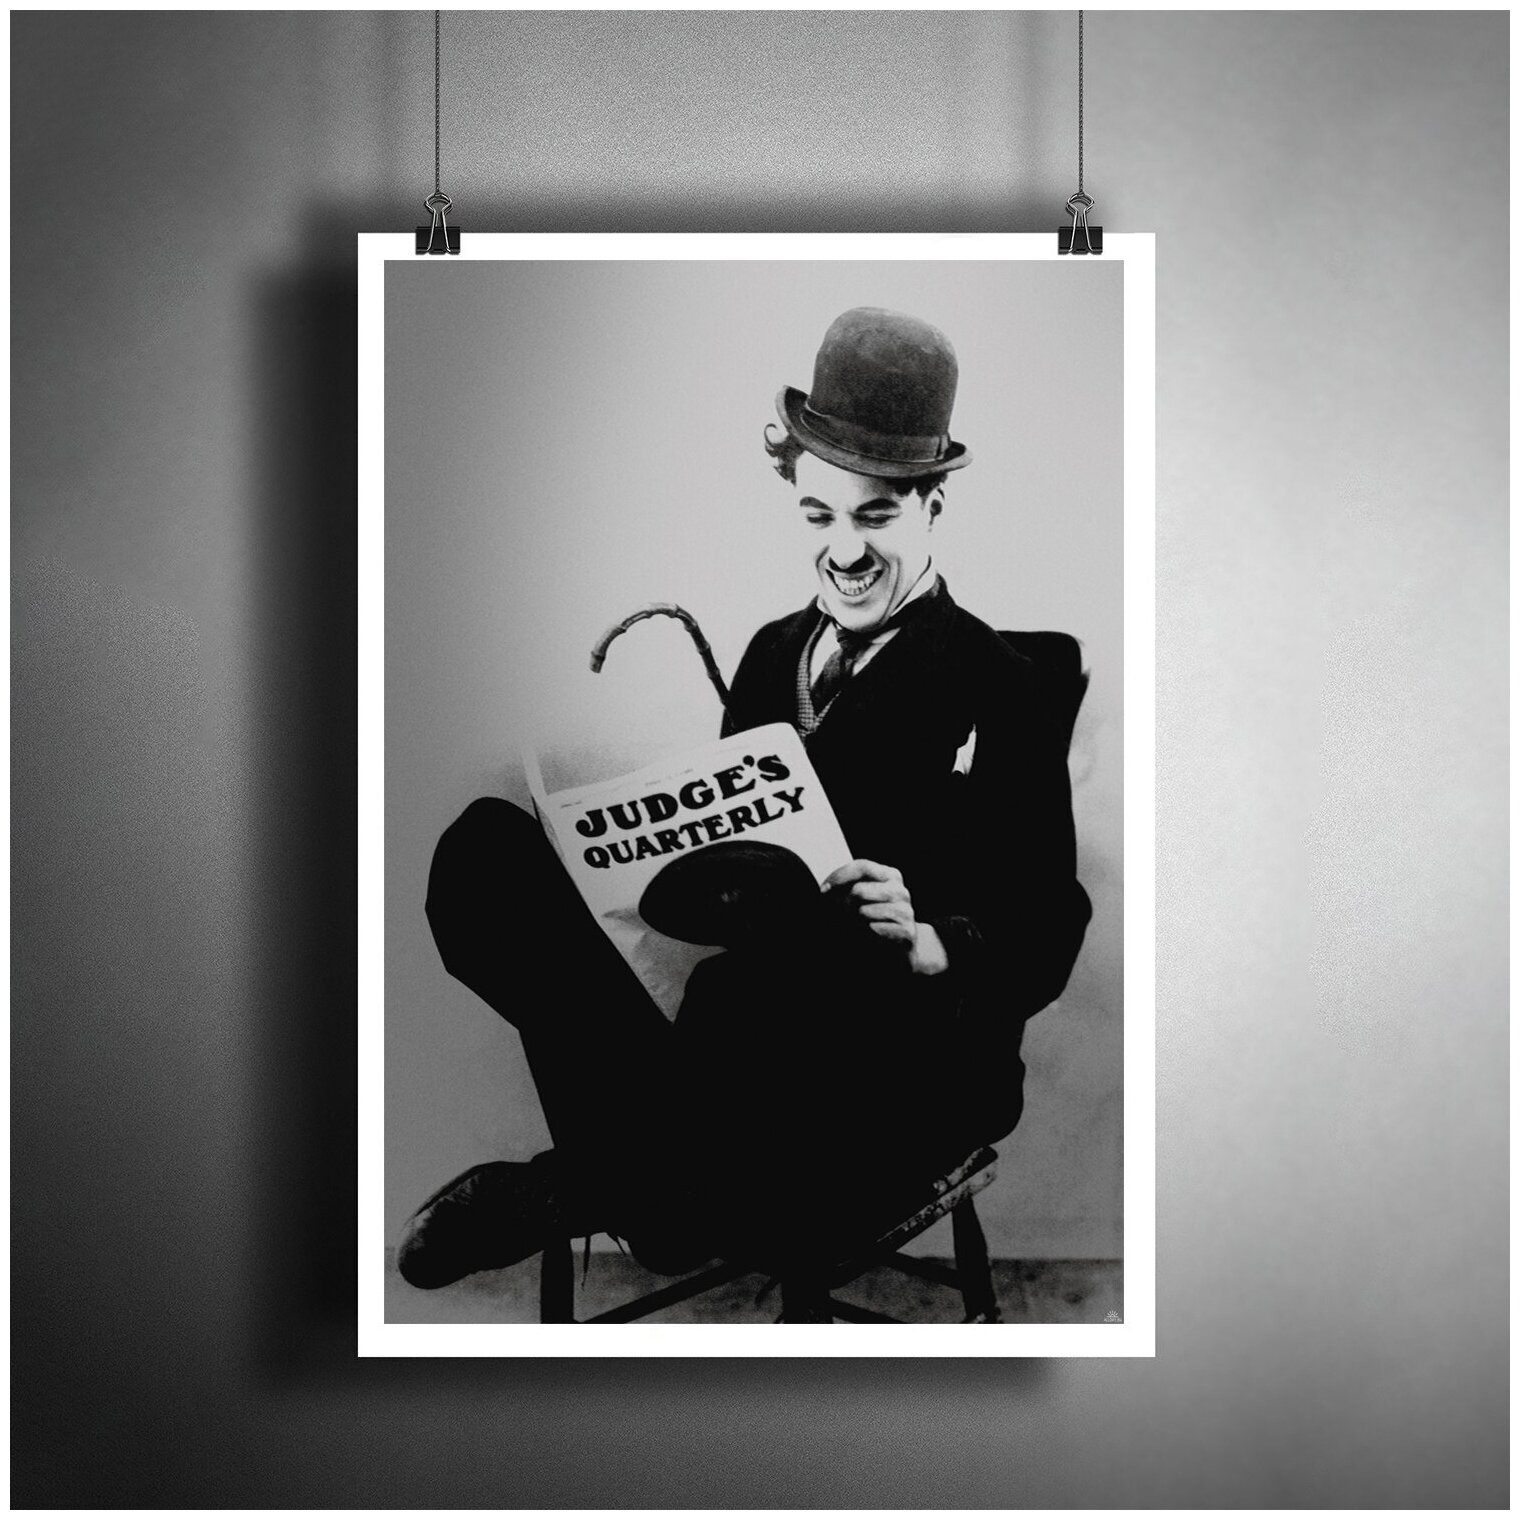 Постер плакат для интерьера "Кино: Чарли Чаплин. Charlie Chaplin"/ Декор дома, офиса, комнаты A3 (297 x 420 мм)